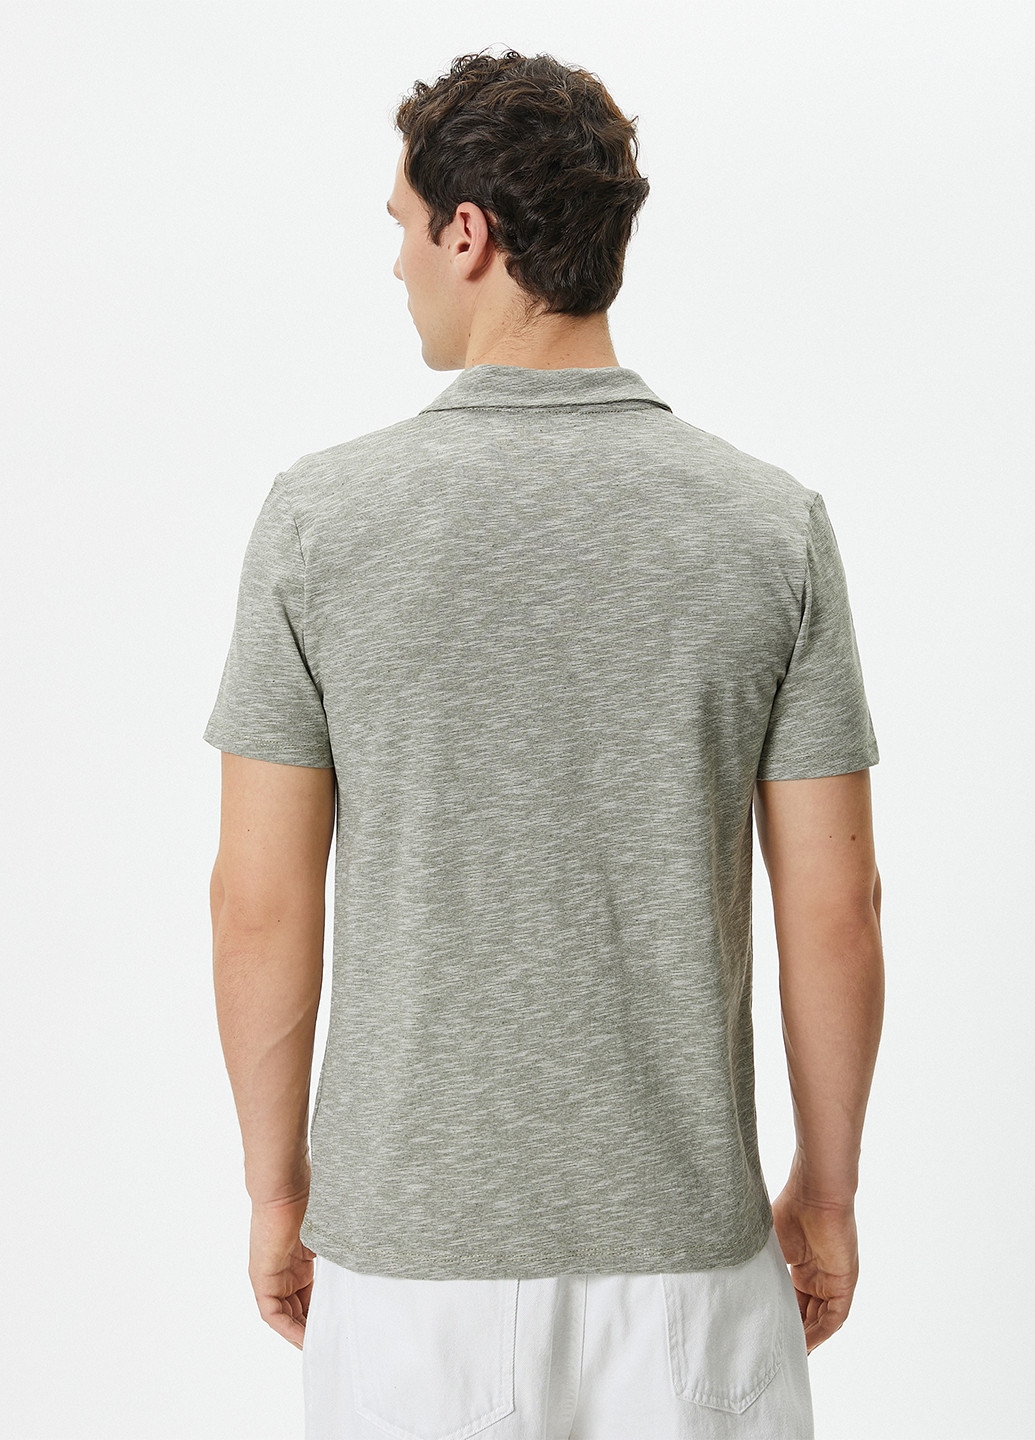 Светло-серая футболка-поло для мужчин KOTON меланжевая